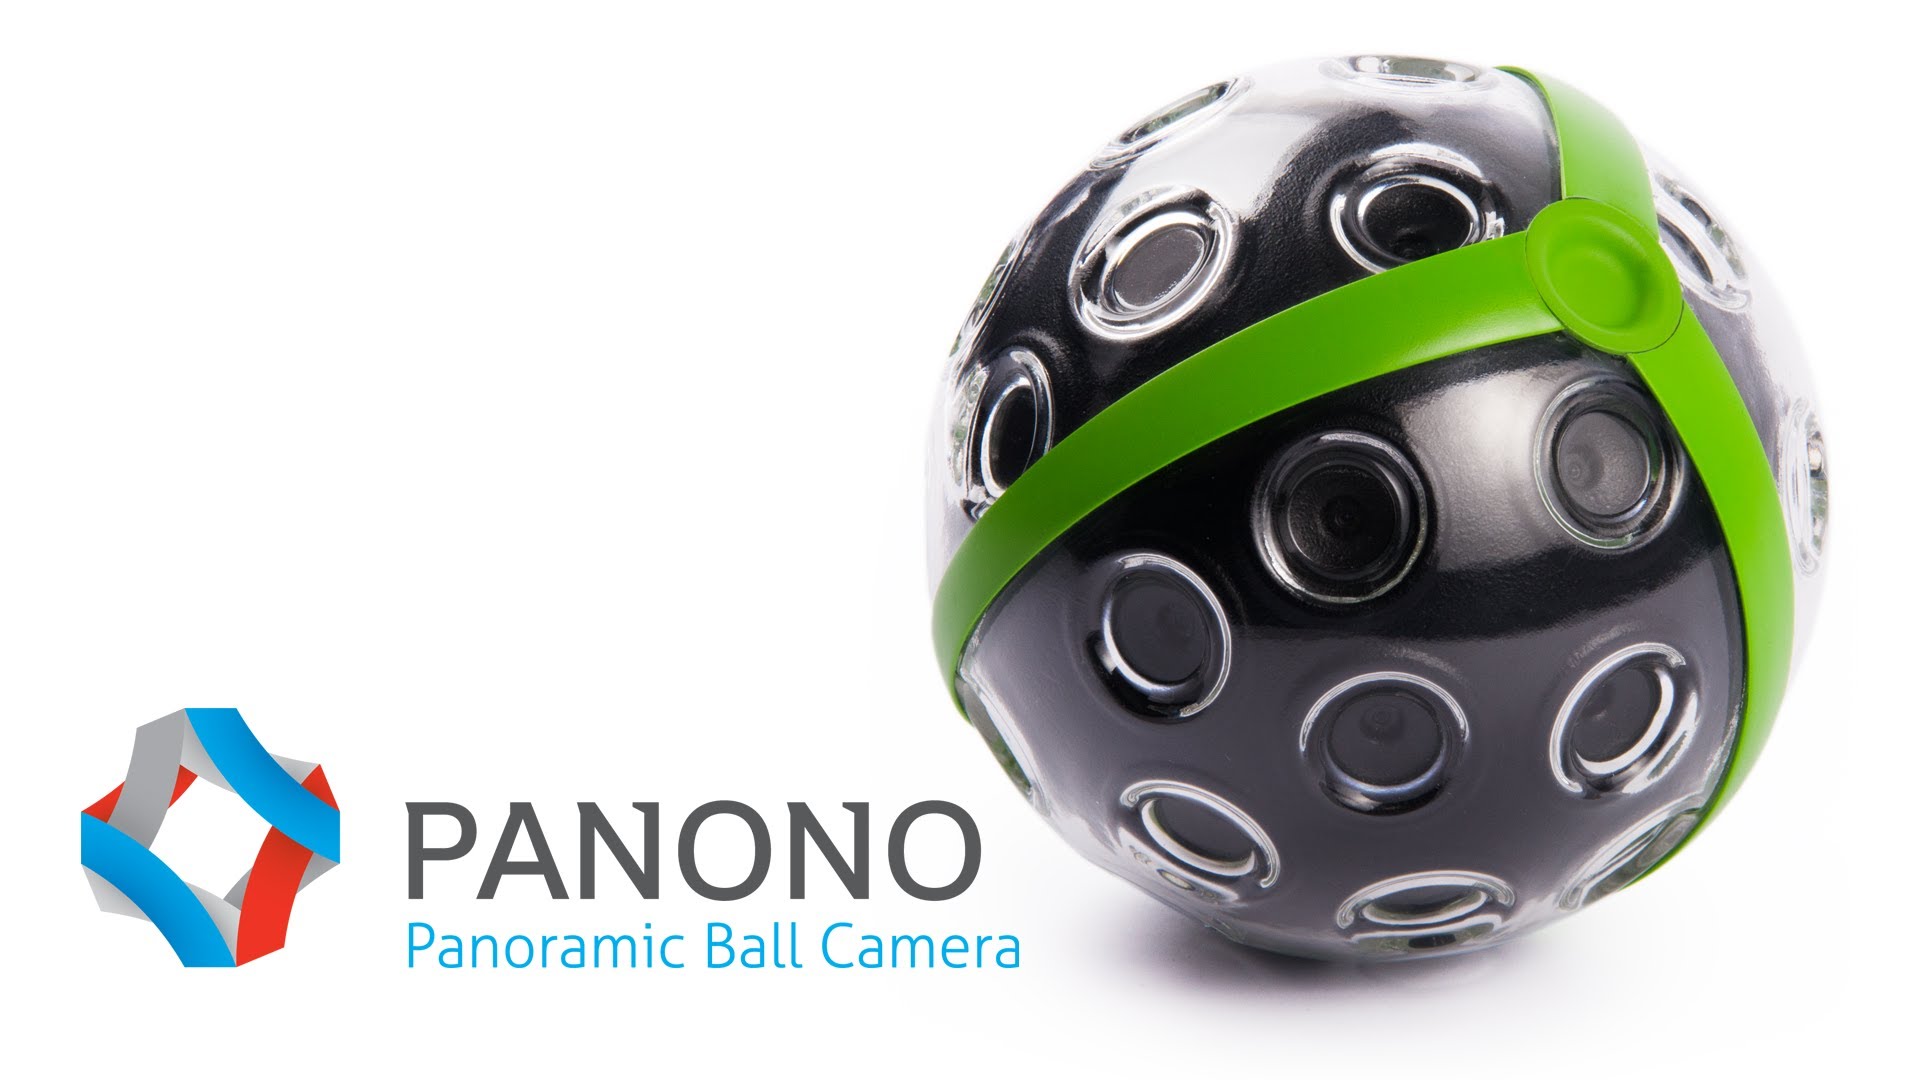 Panono: The Panoramic Ball Camera